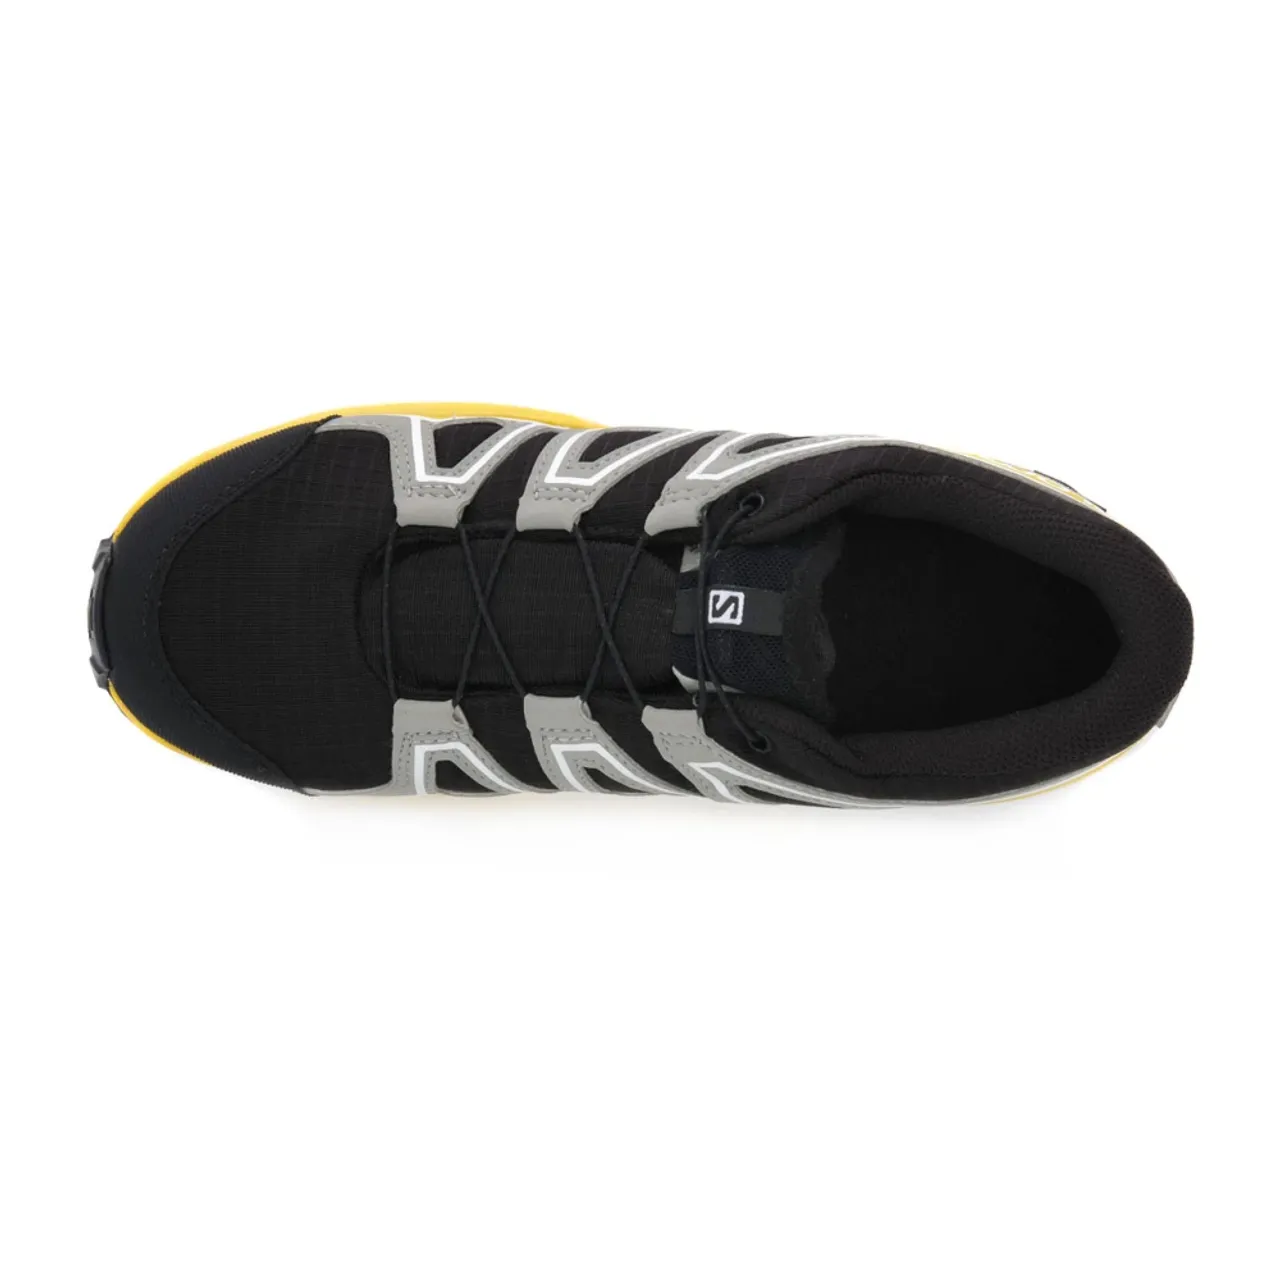 Salomon , Speedcross Cswp J Trail Running Shoes ,Black male, Sizes: